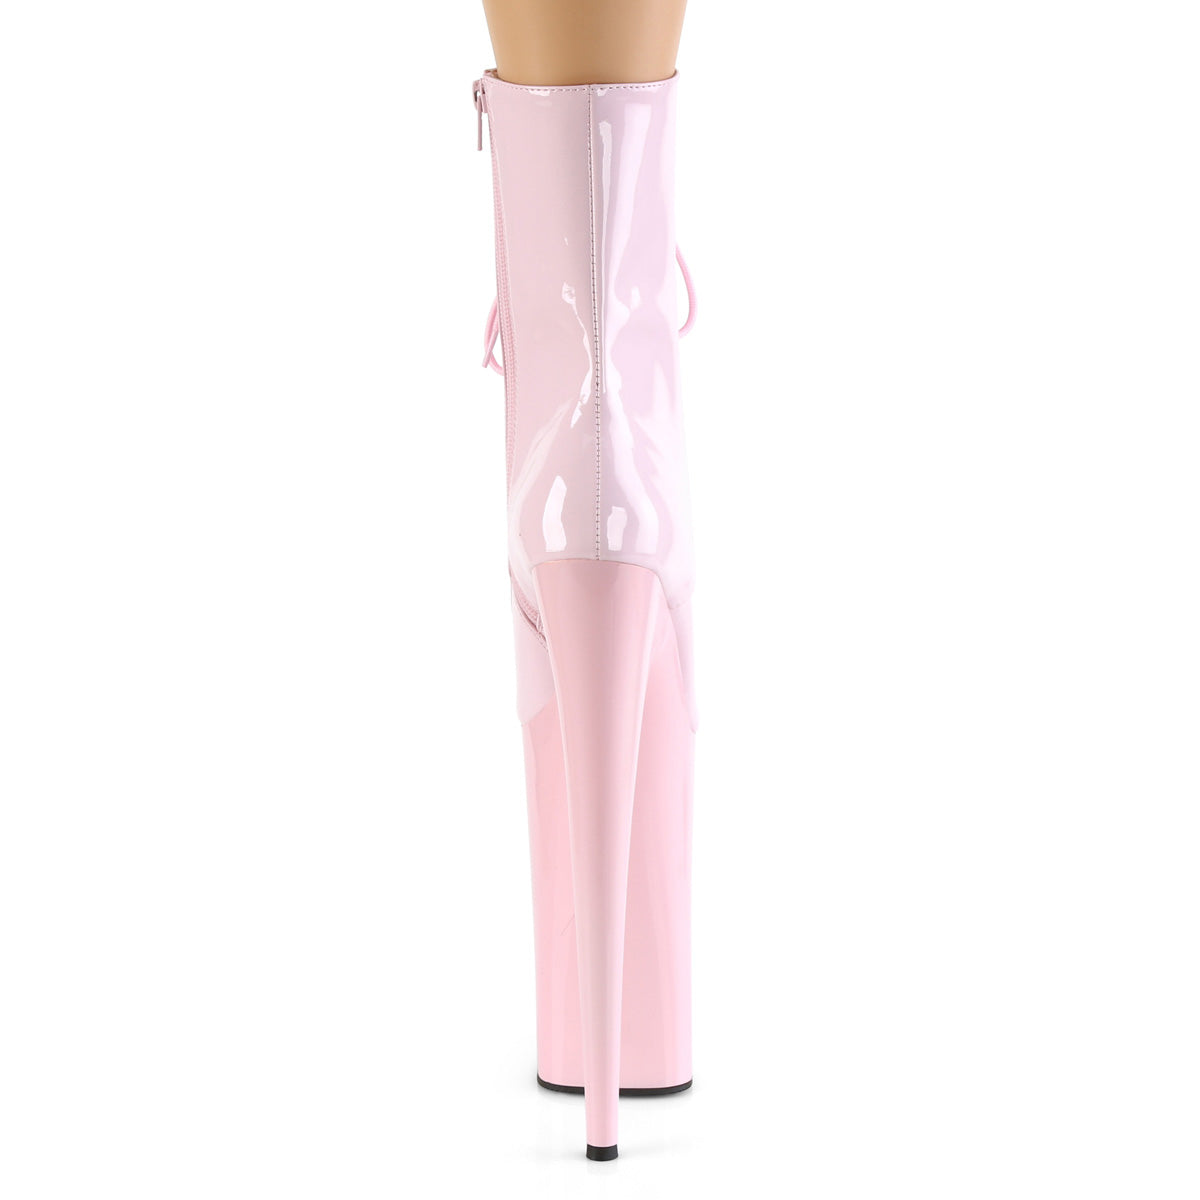 BEYOND-1020 Sexy 10" Heel Baby Pink Pole Dancing Platforms-Pleaser- Sexy Shoes Fetish Footwear